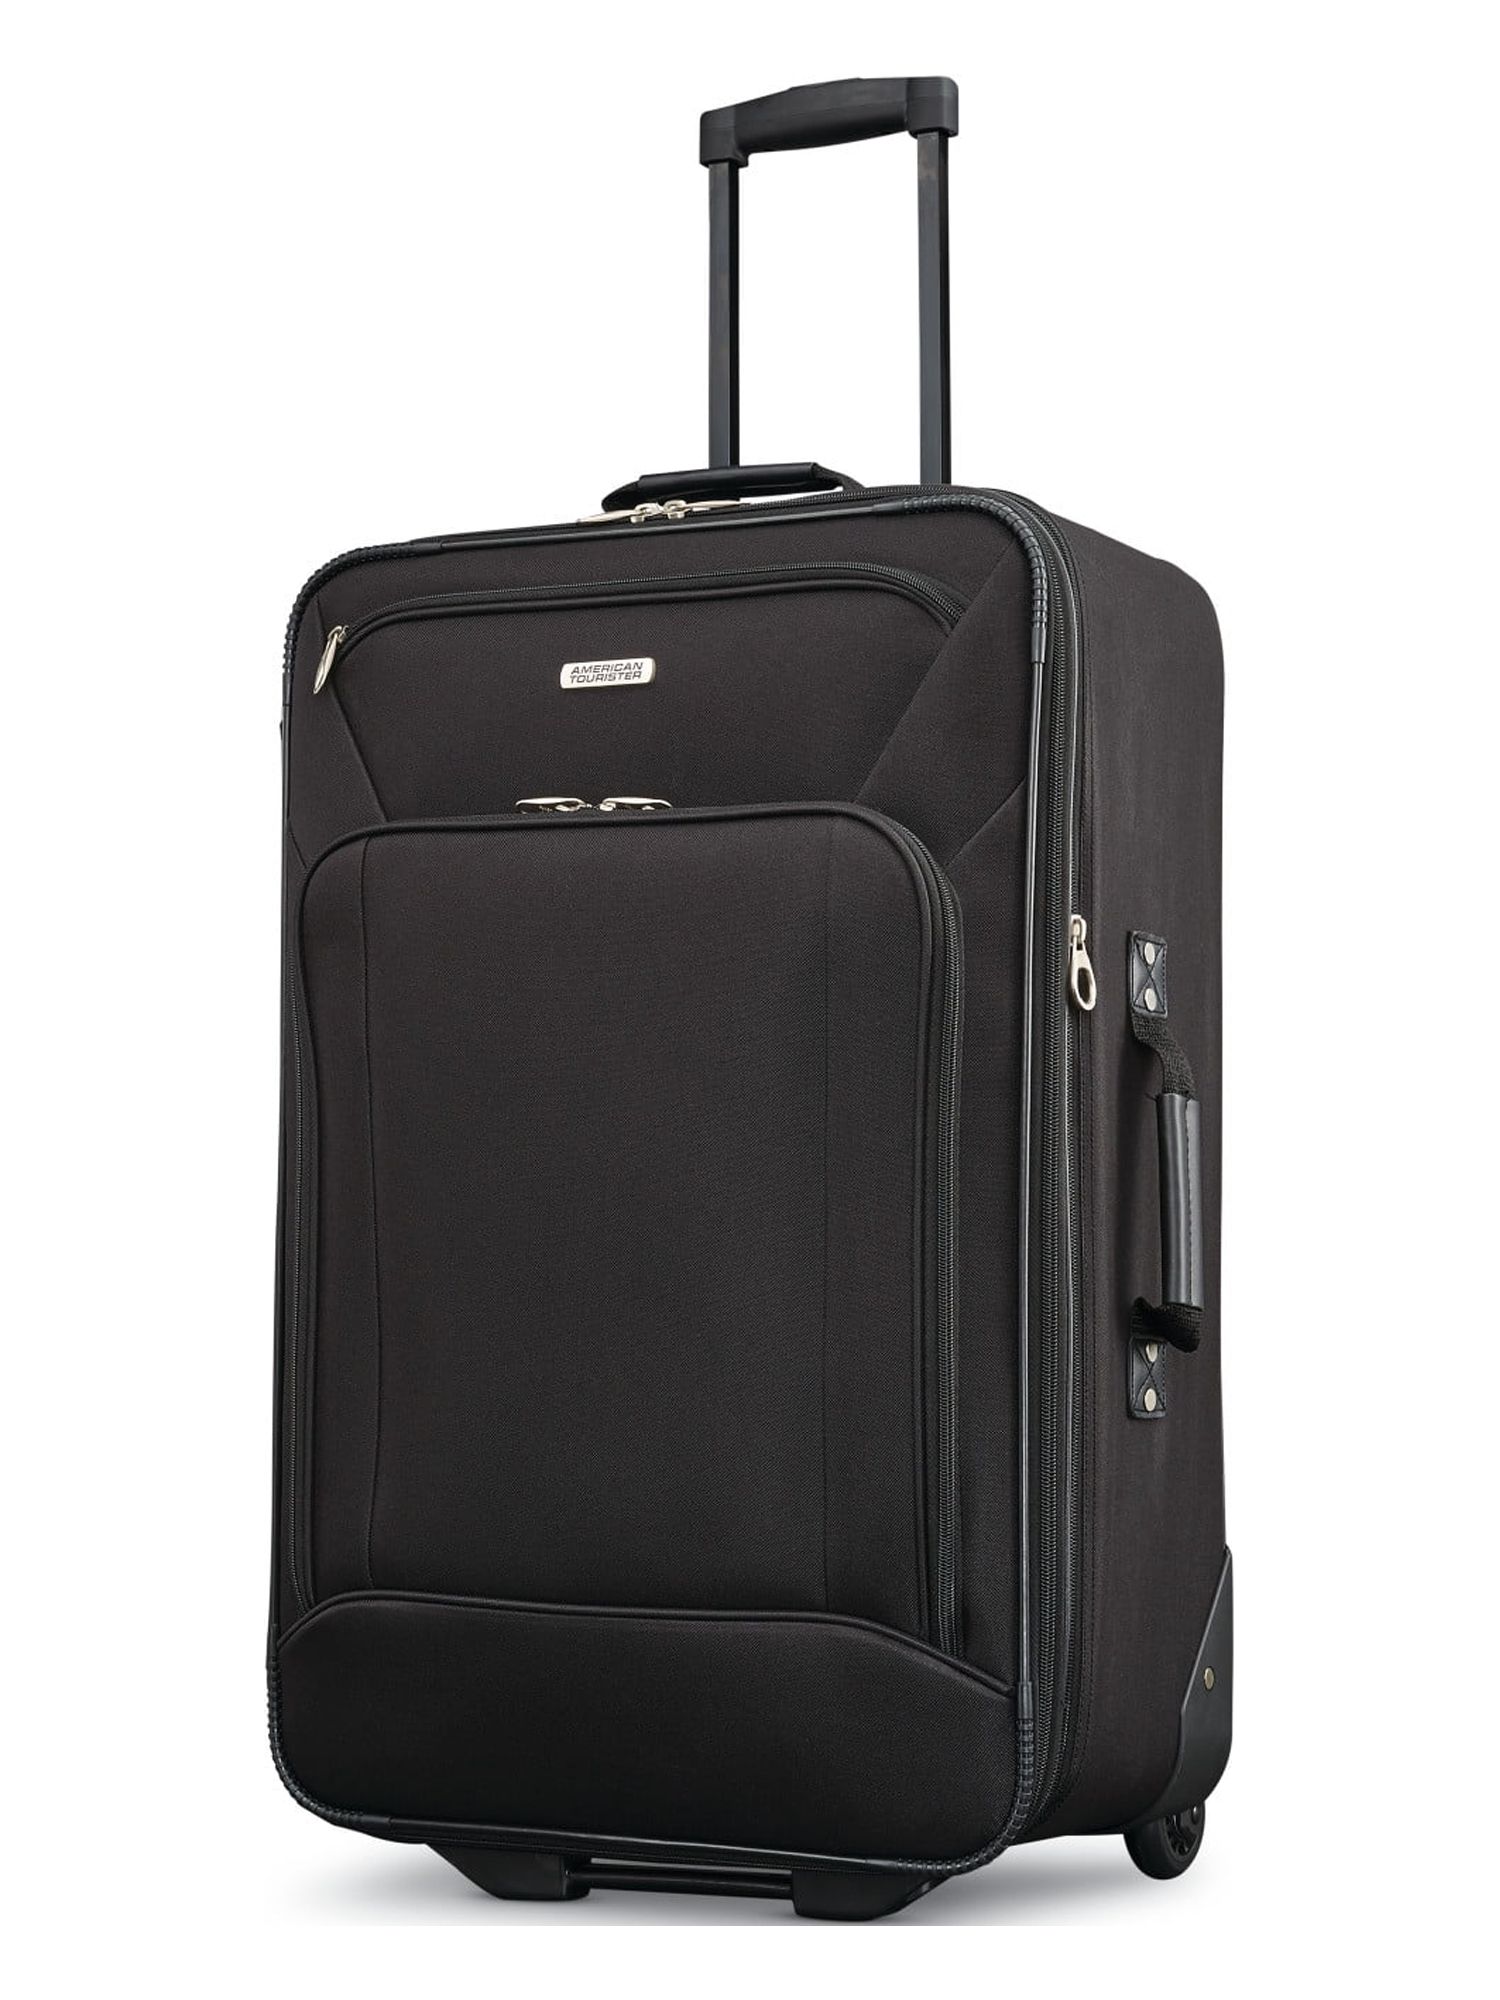 American Tourister Fieldbrook XLT 4 Piece Softside Luggage Set - image 5 of 5